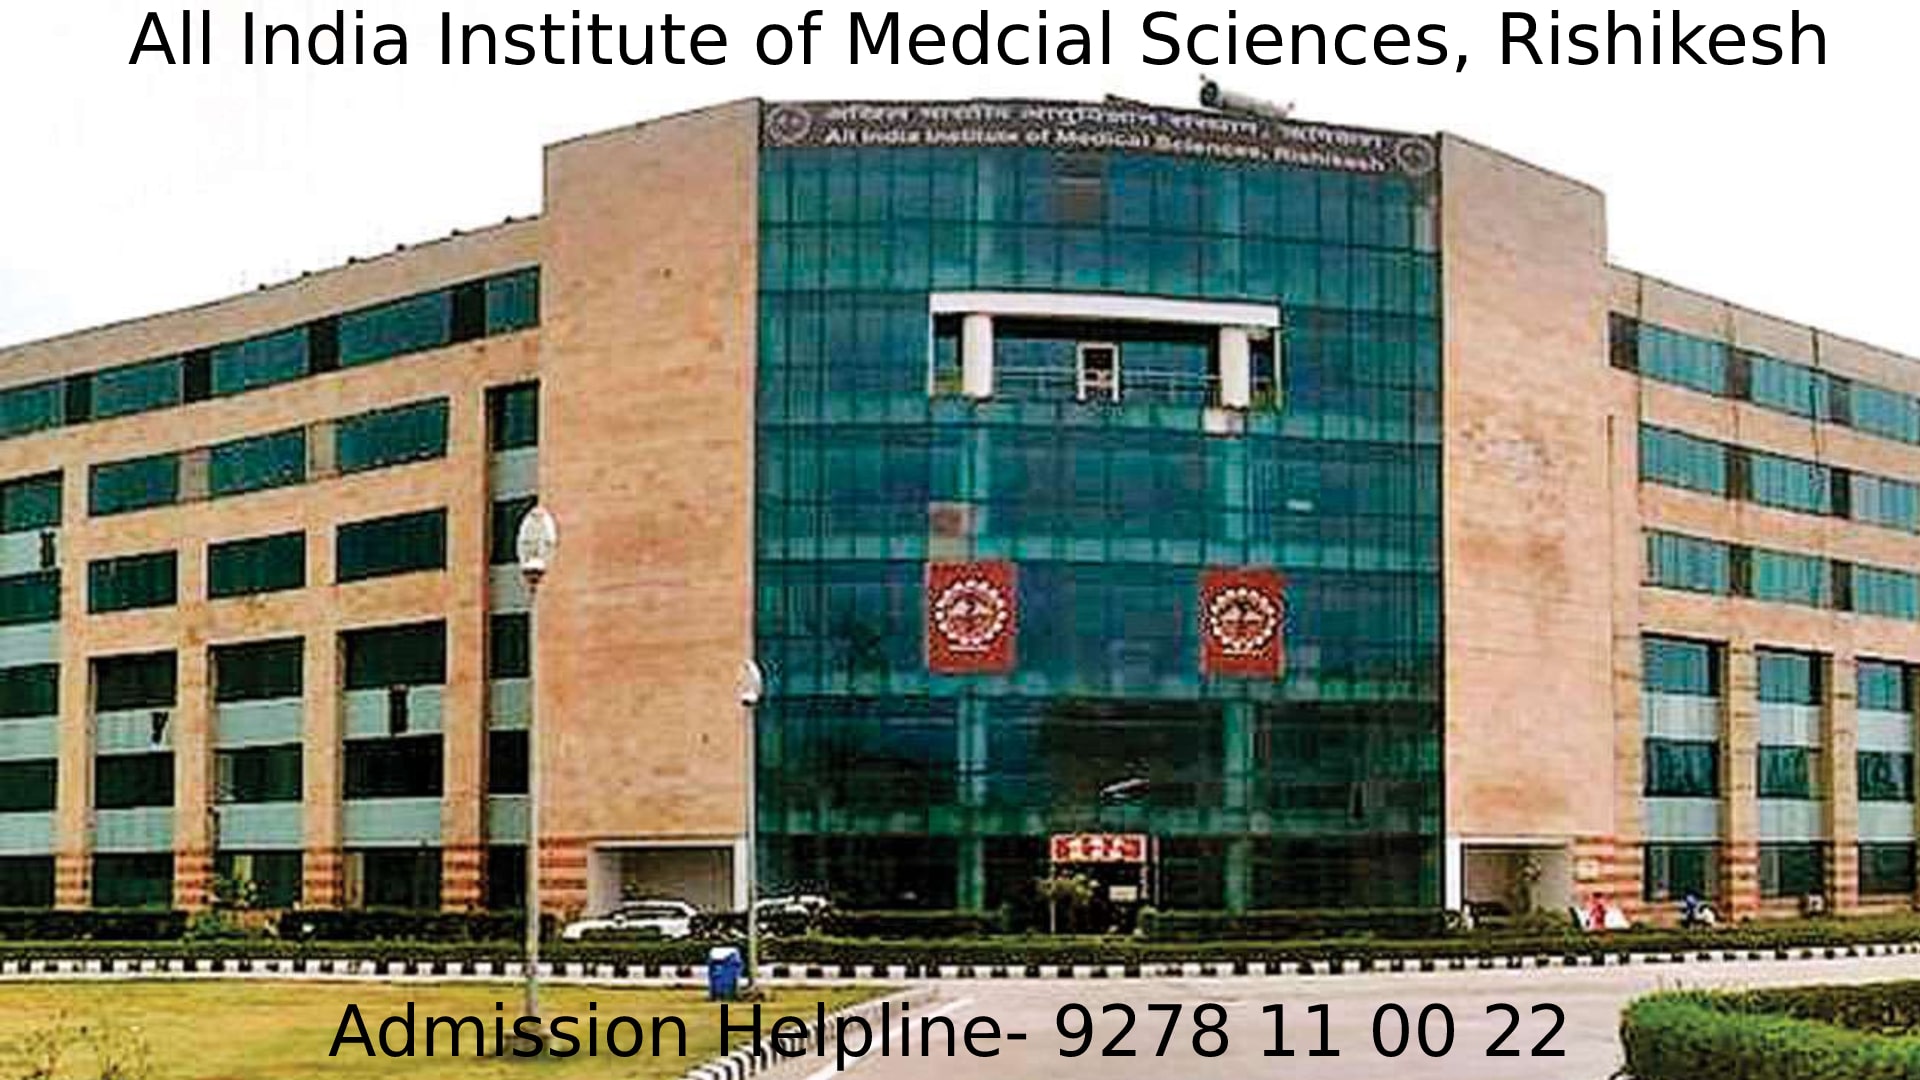 All India Institute of Medical Sciences (AIIMS) Rishikesh